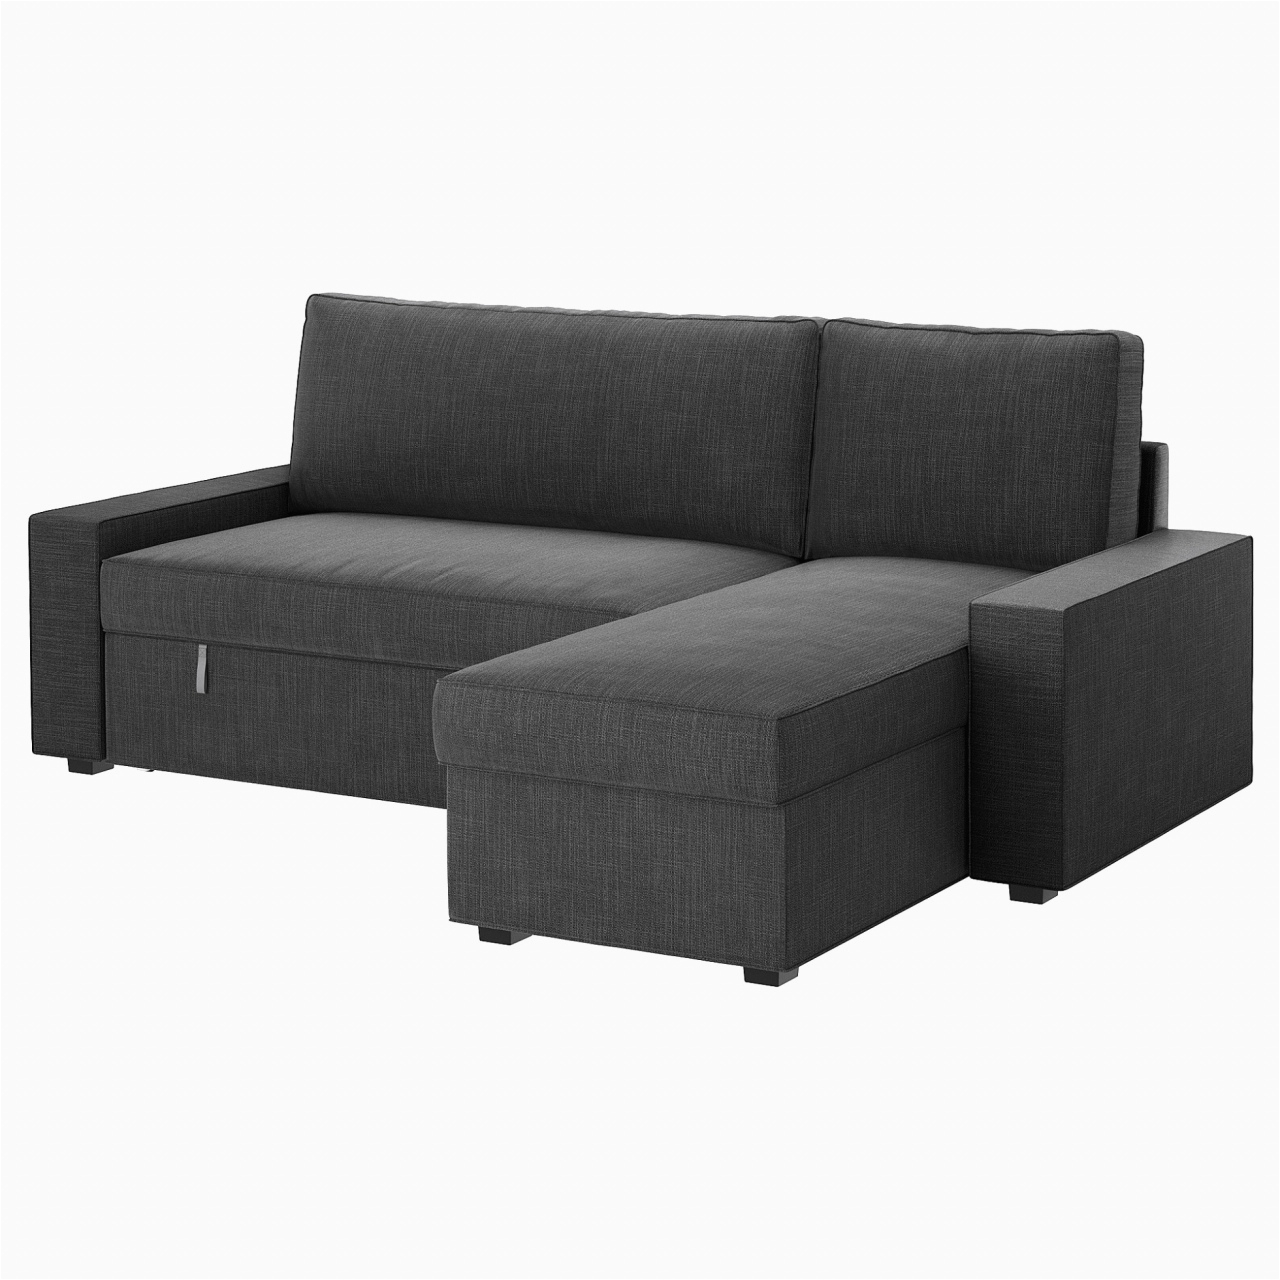 Big Stoff sofa sofa Couch Bed Baur sofa Neu Big sofa Microfaser Neu sofa